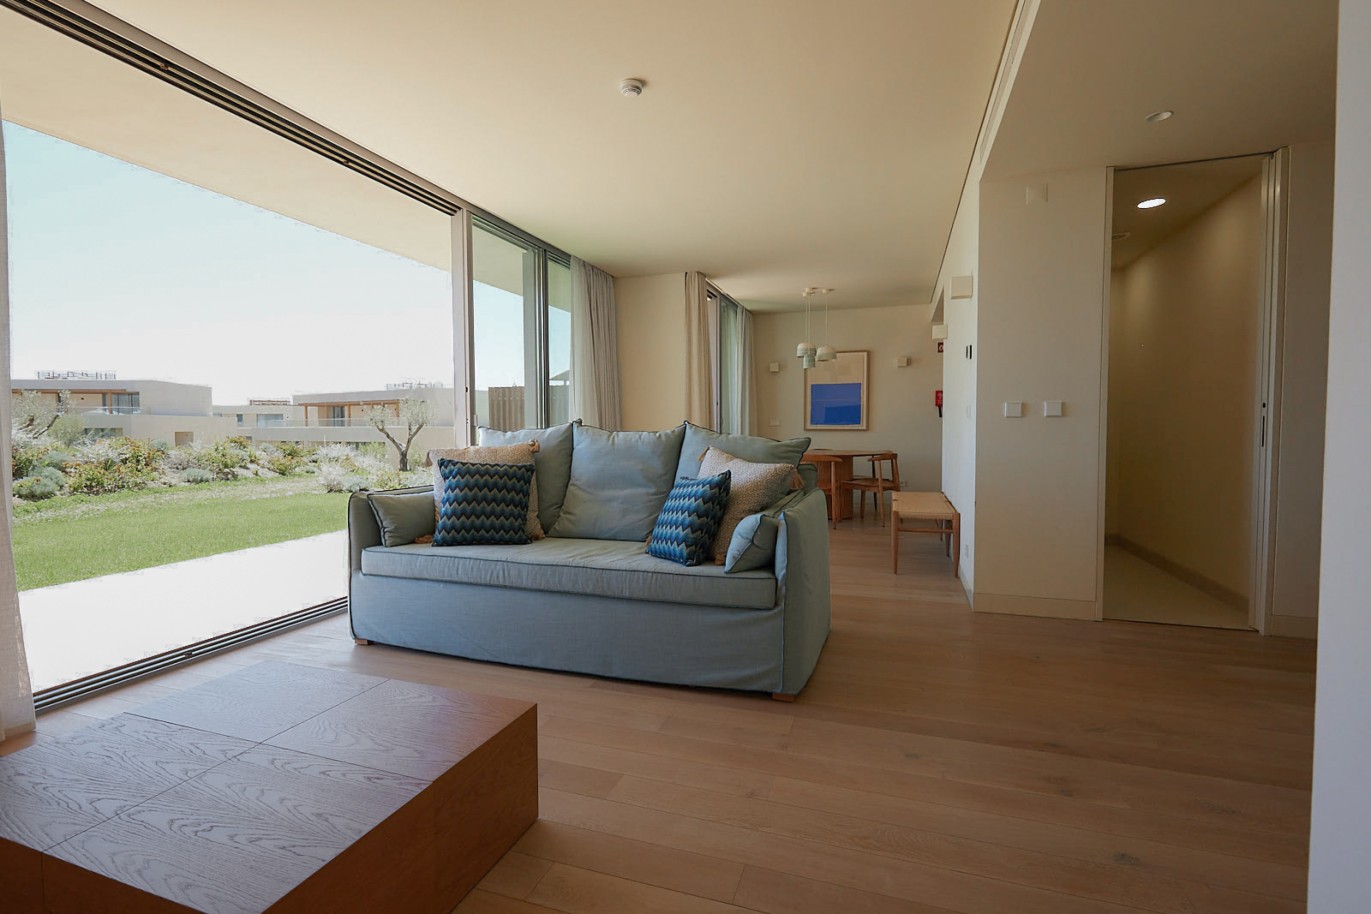 2 bedroom apartment in resort, for sale in Porches, Algarve_230492